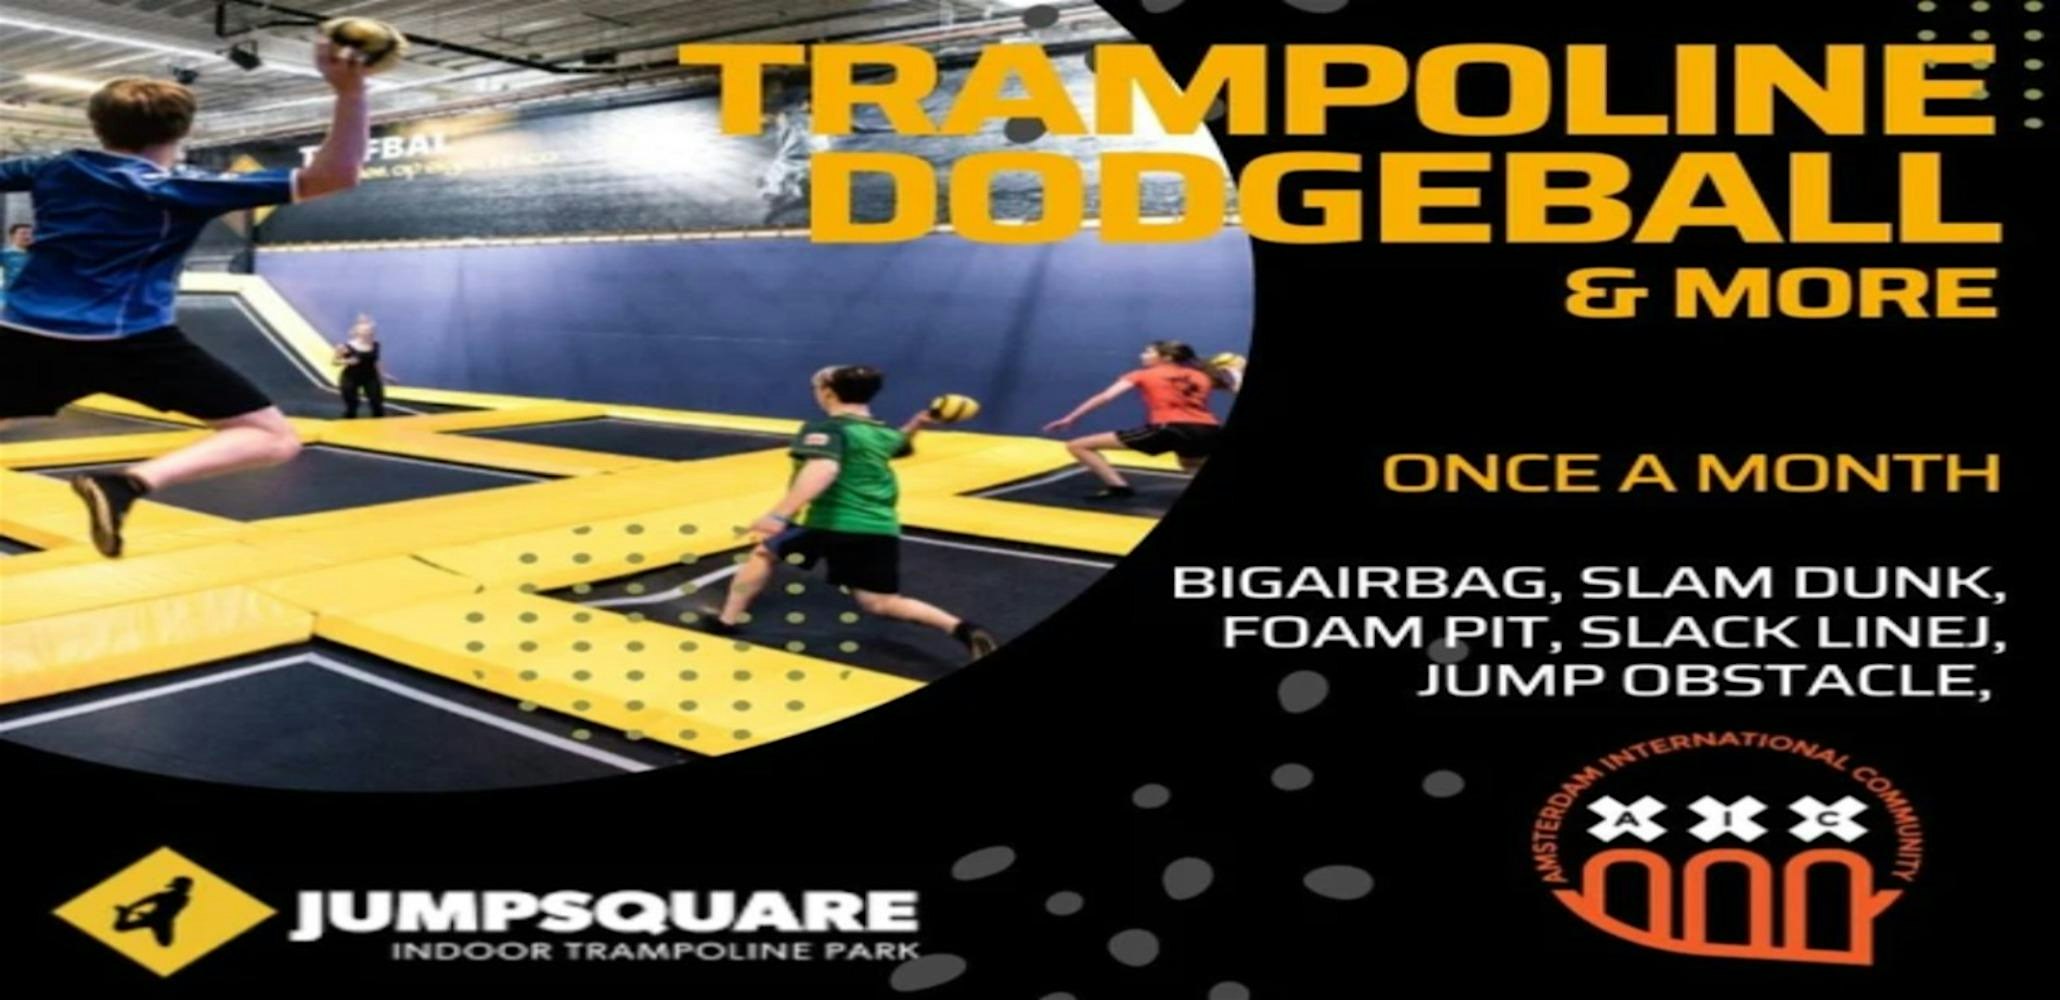 Trampoline dodgeball @ Jumpsquare